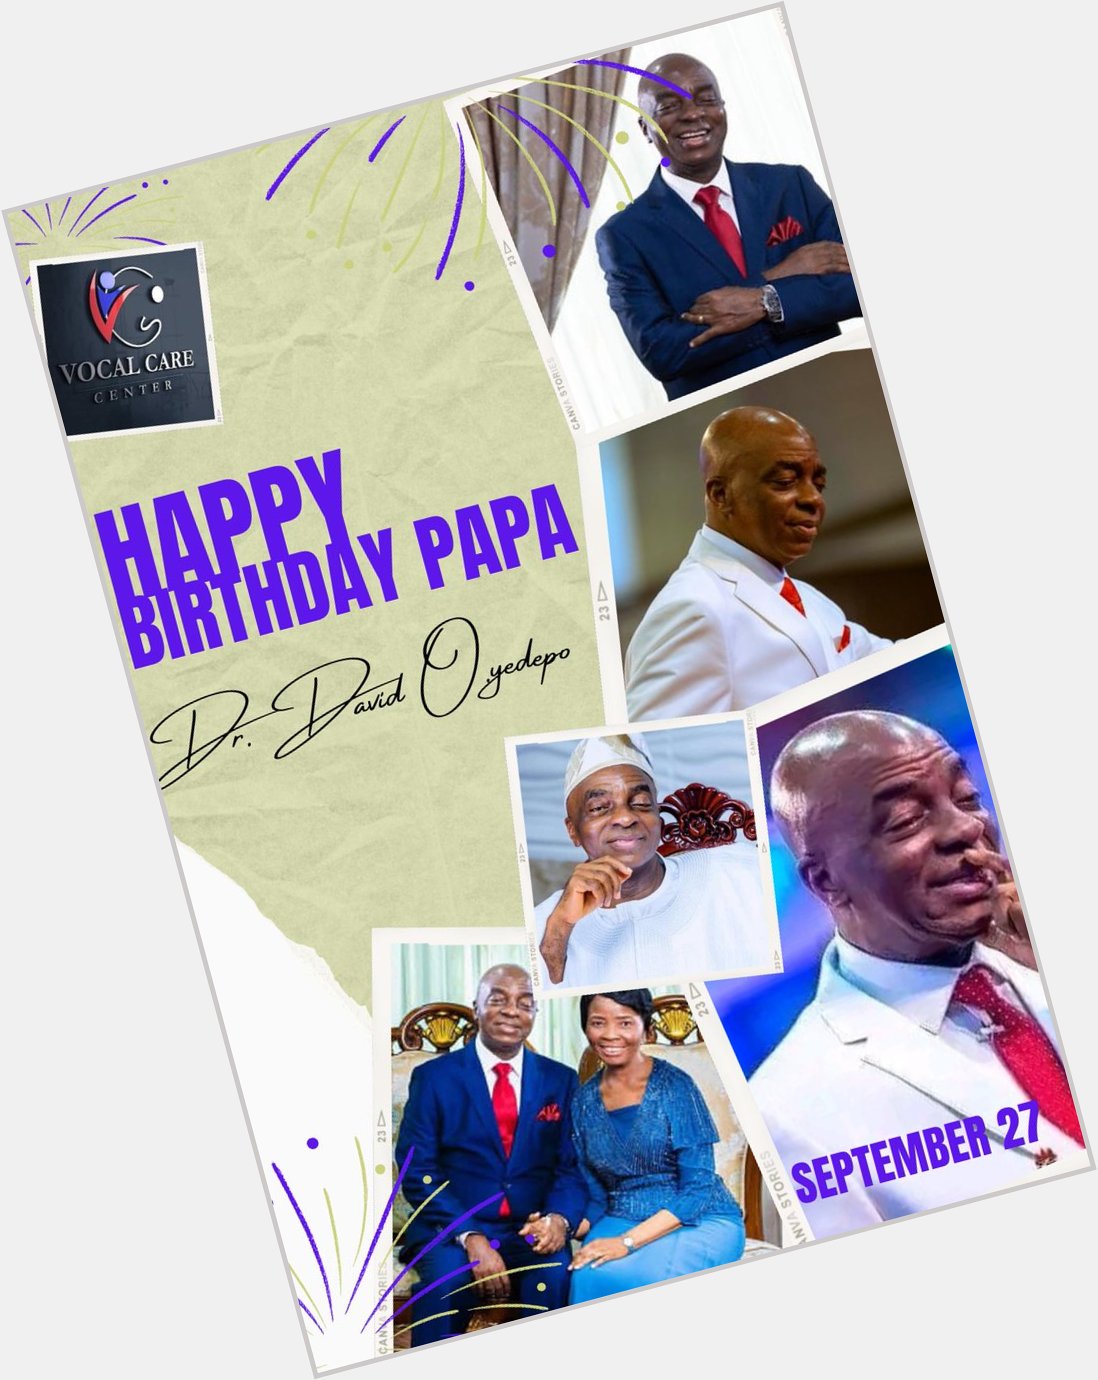 Papa happy birthday Sir!

Bishop David Oyedepo

We love and honor you Sir. 